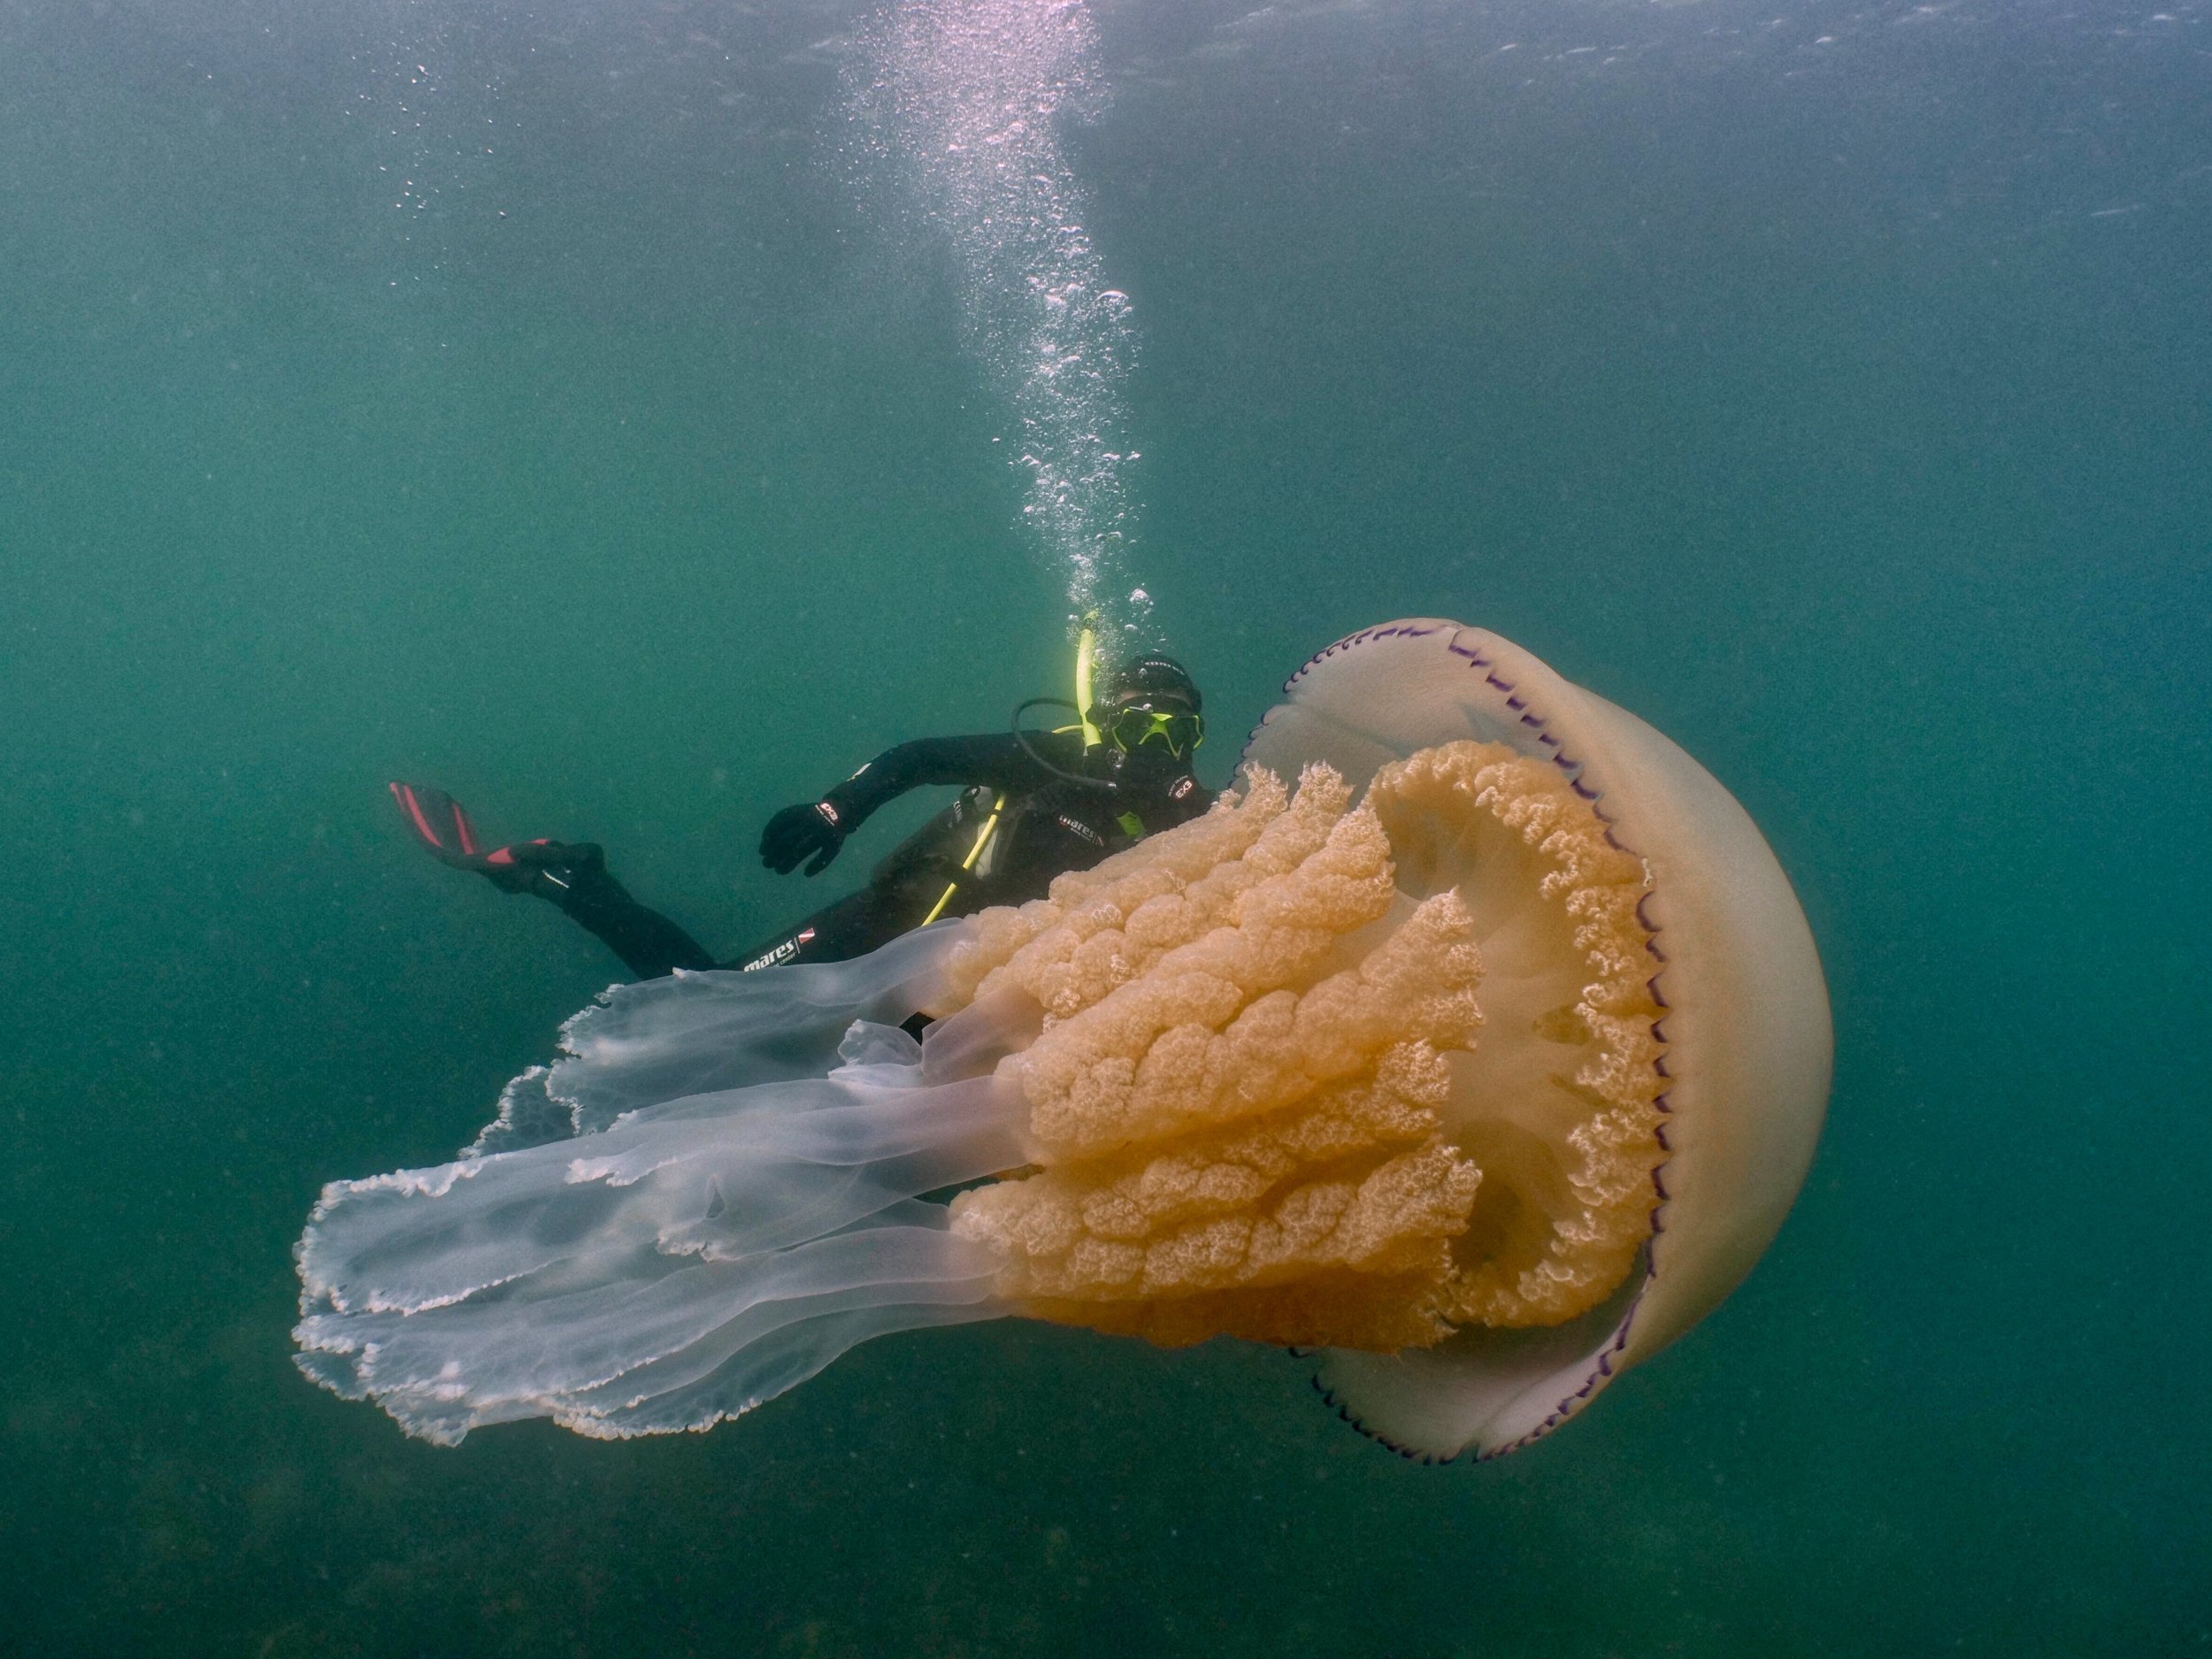 Jellyfish lizzie Daly copyright is Dan Abbott.jpg